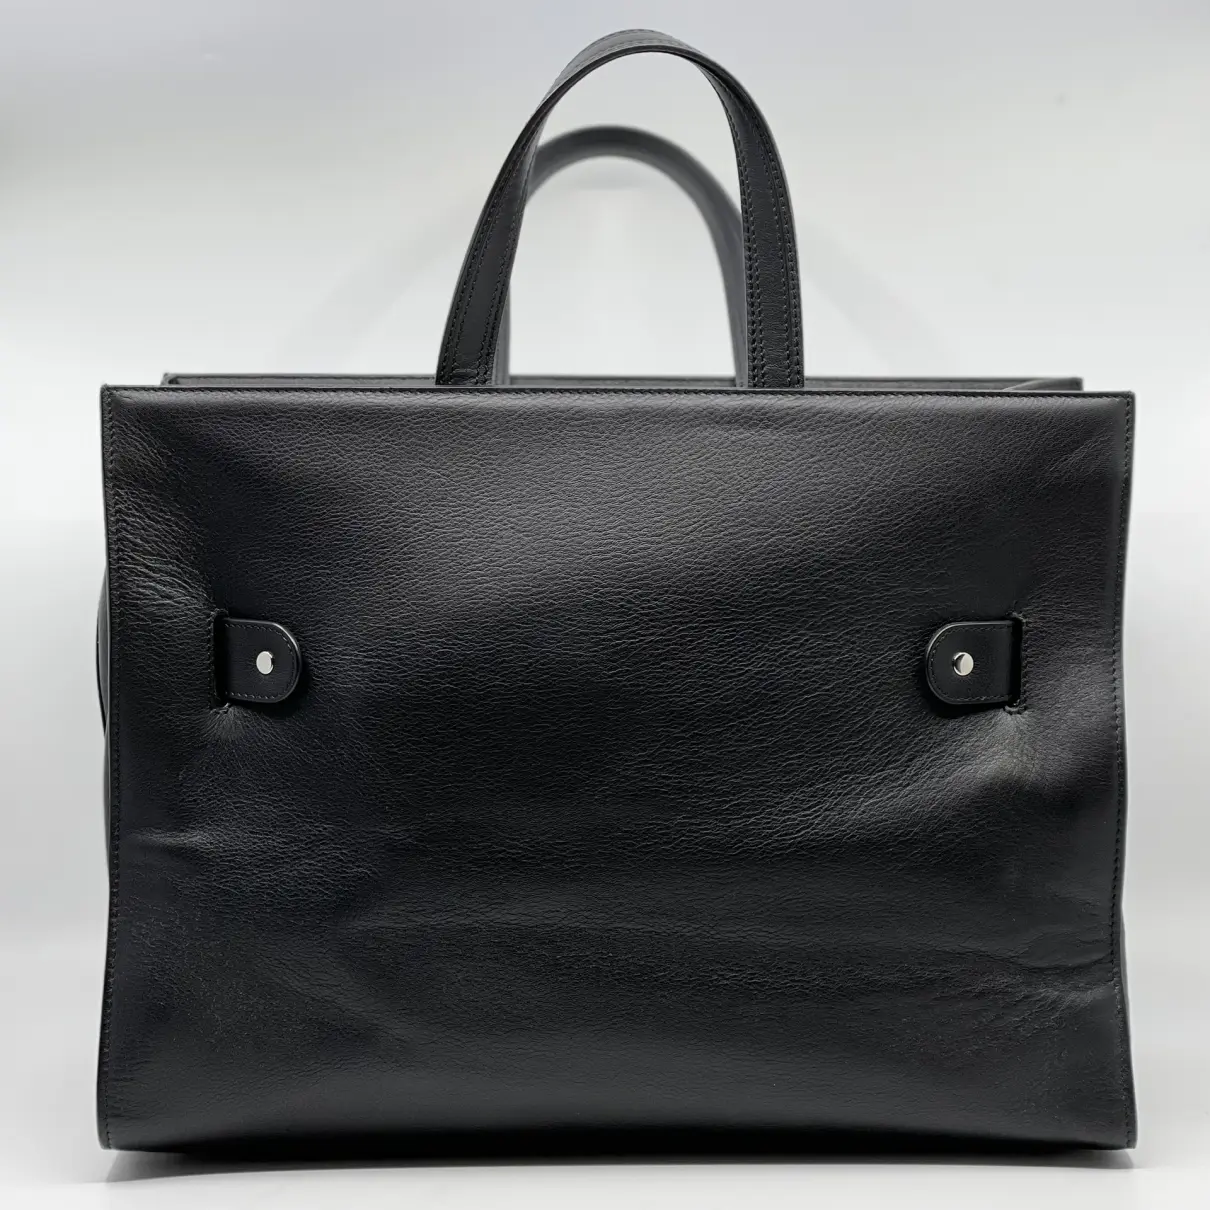 Buy Proenza Schouler PS11 leather tote online